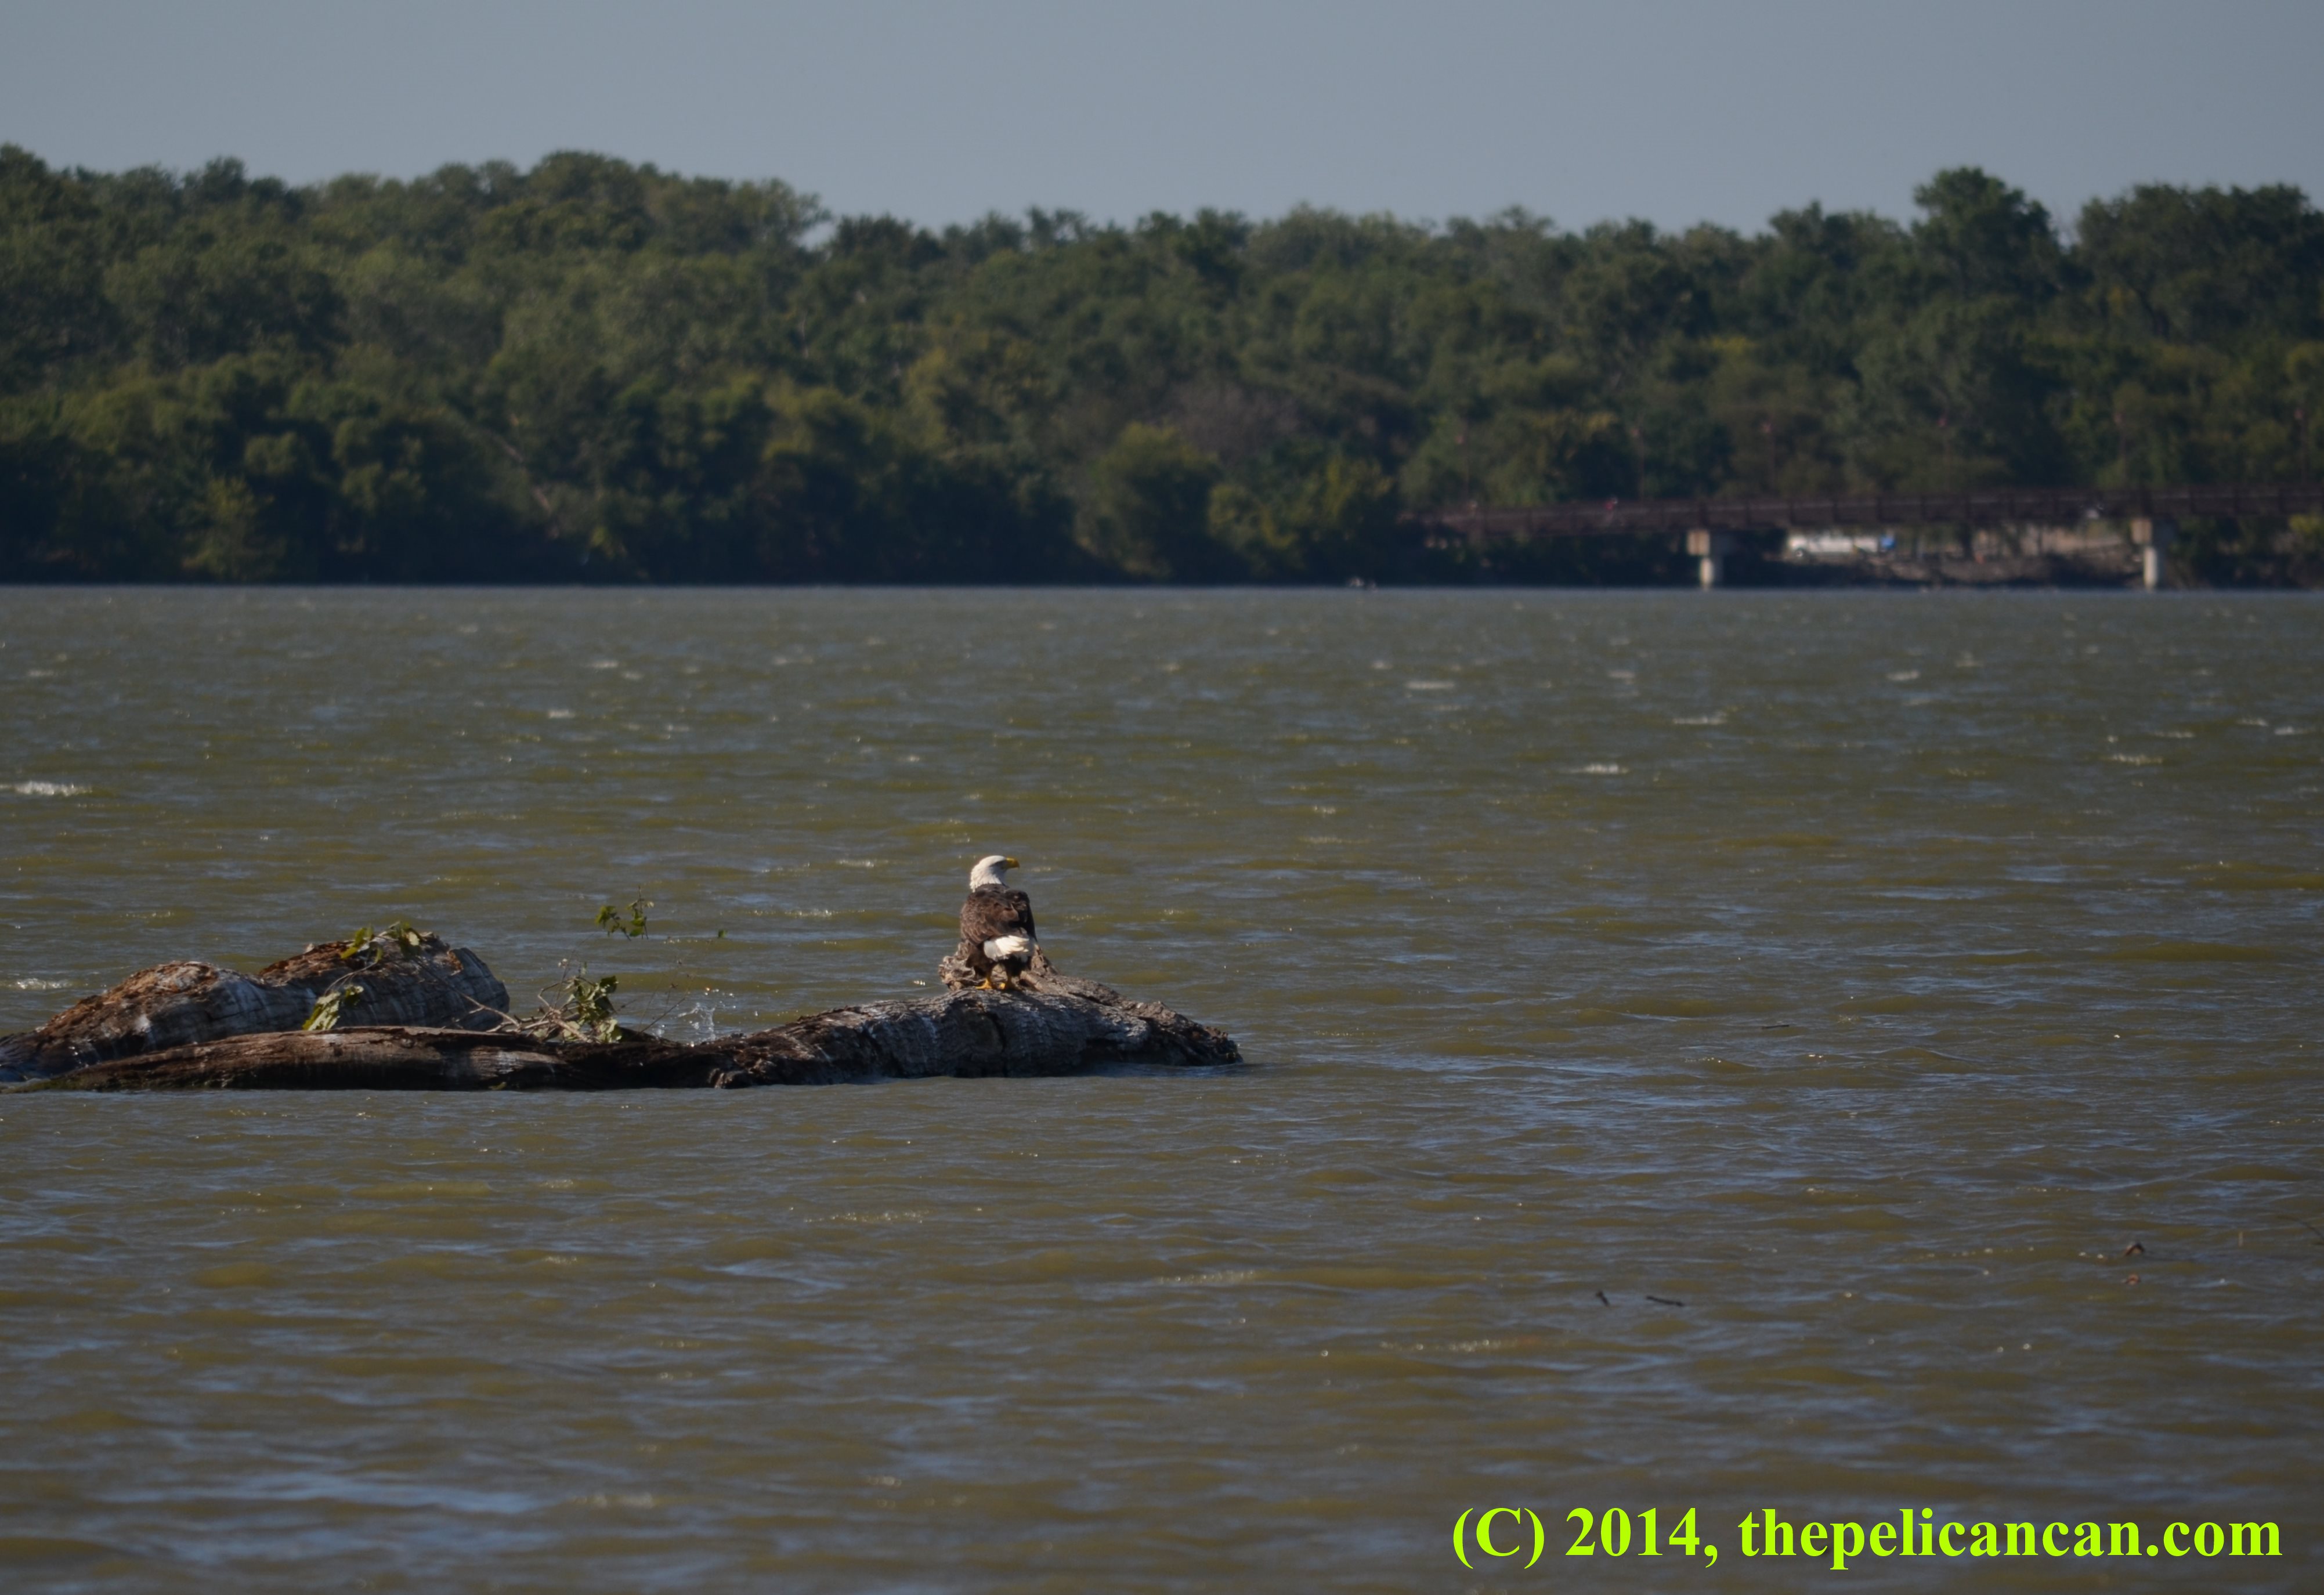 A bald eagle (Haliaeetus leucocephalus) standing on a log at White Rock Lake in Dallas, TX